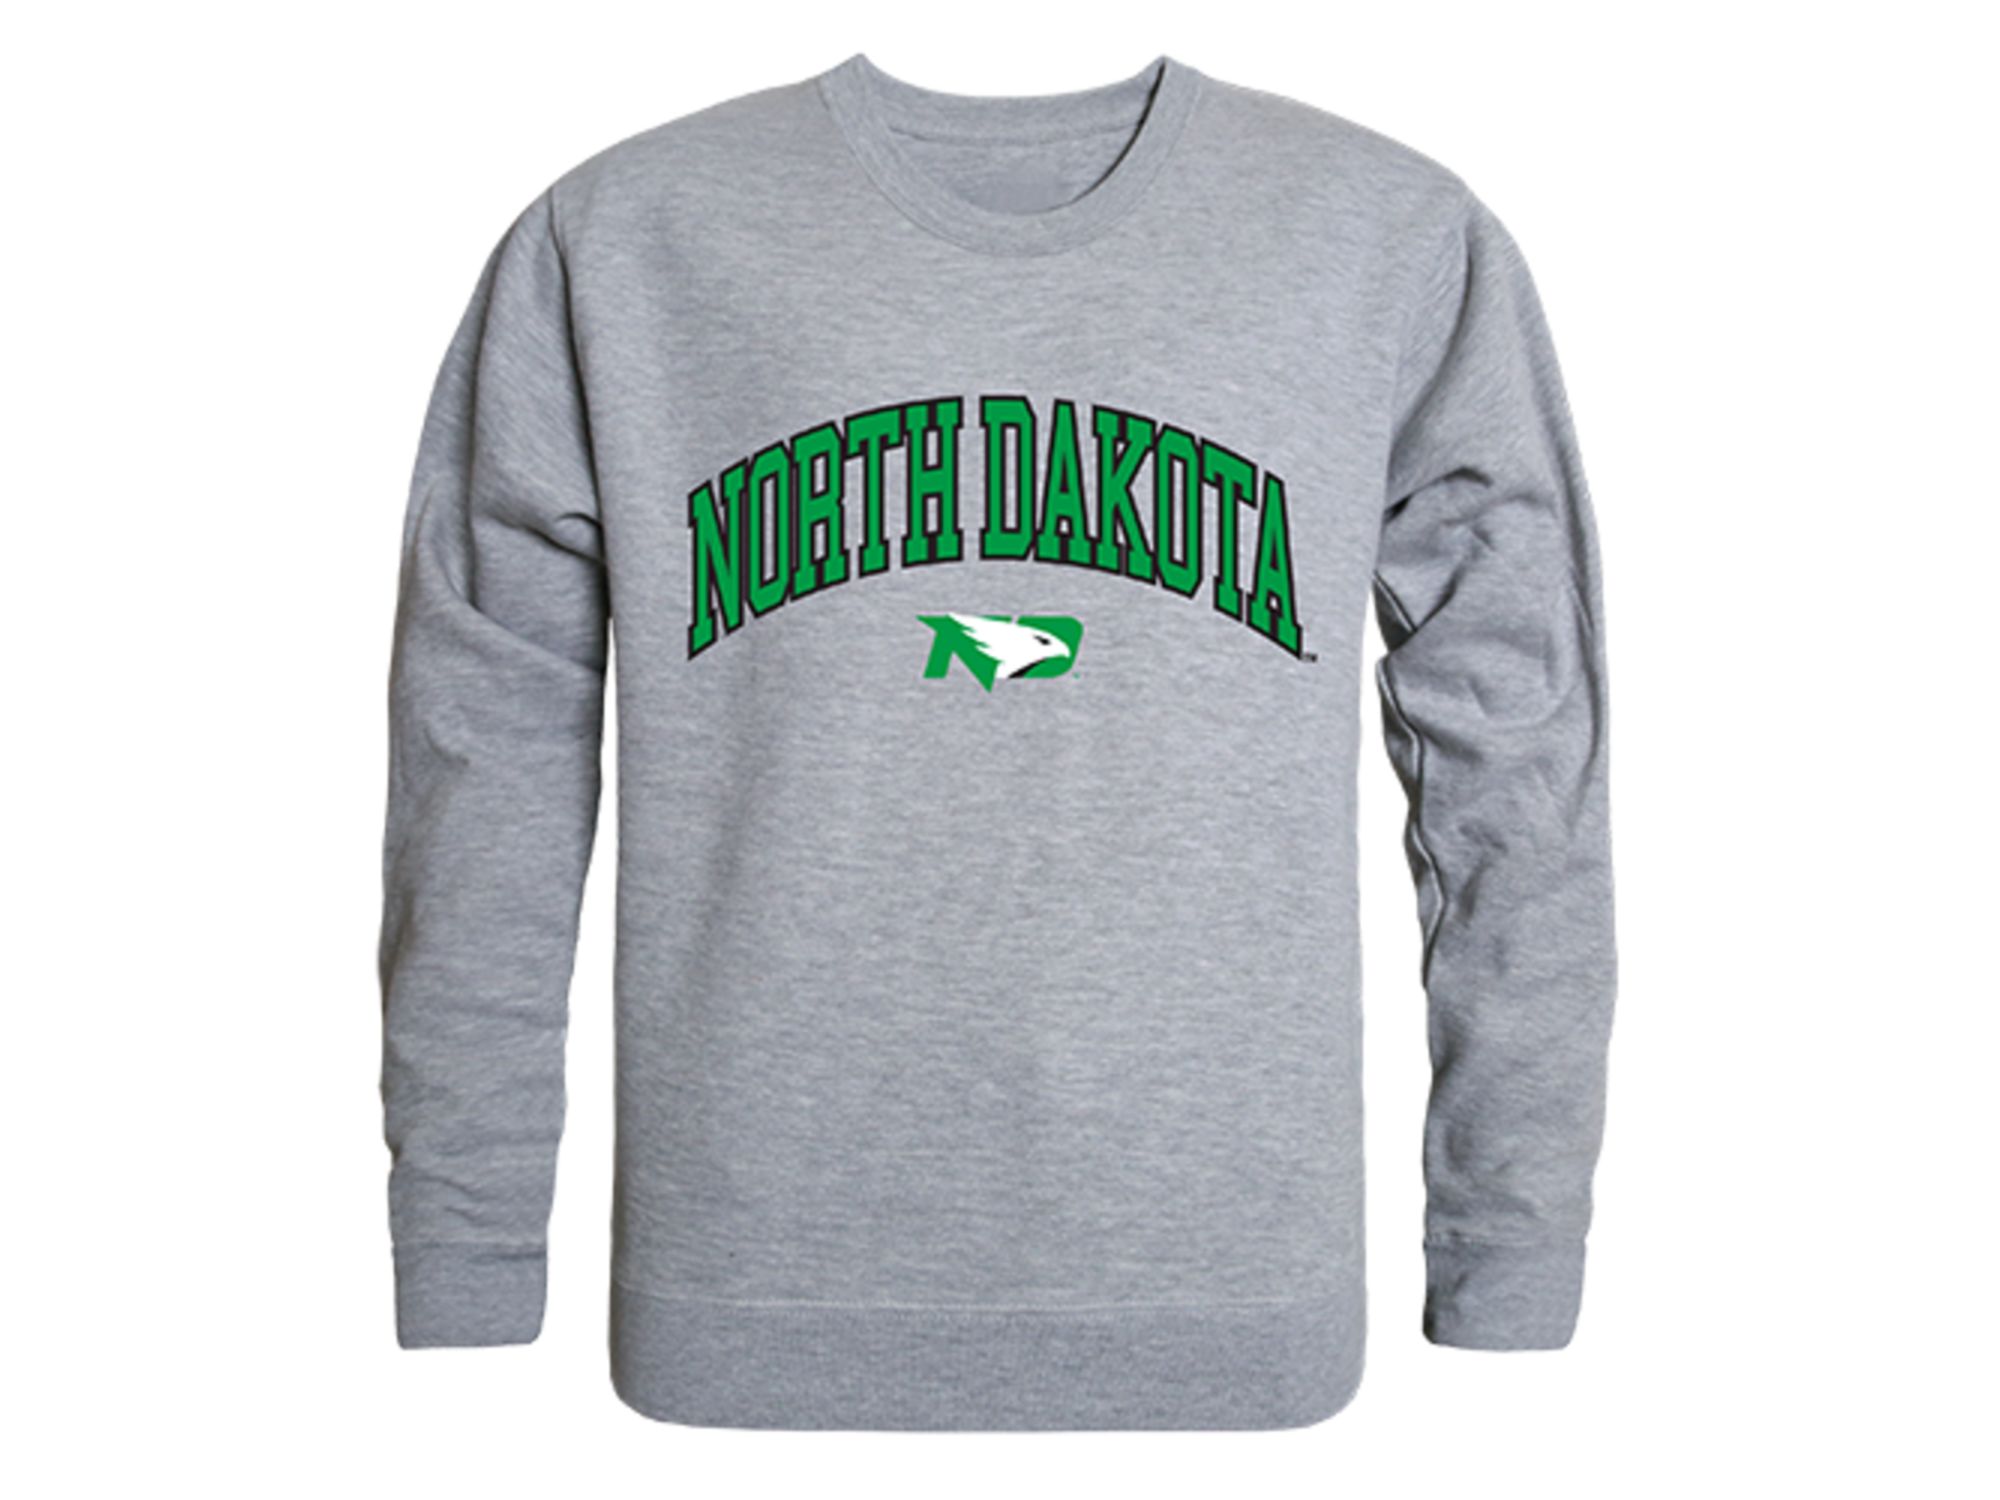 University of North Dakota Fighting Sioux Campus Crewneck Shirt Heather Grey - image 1 of 2